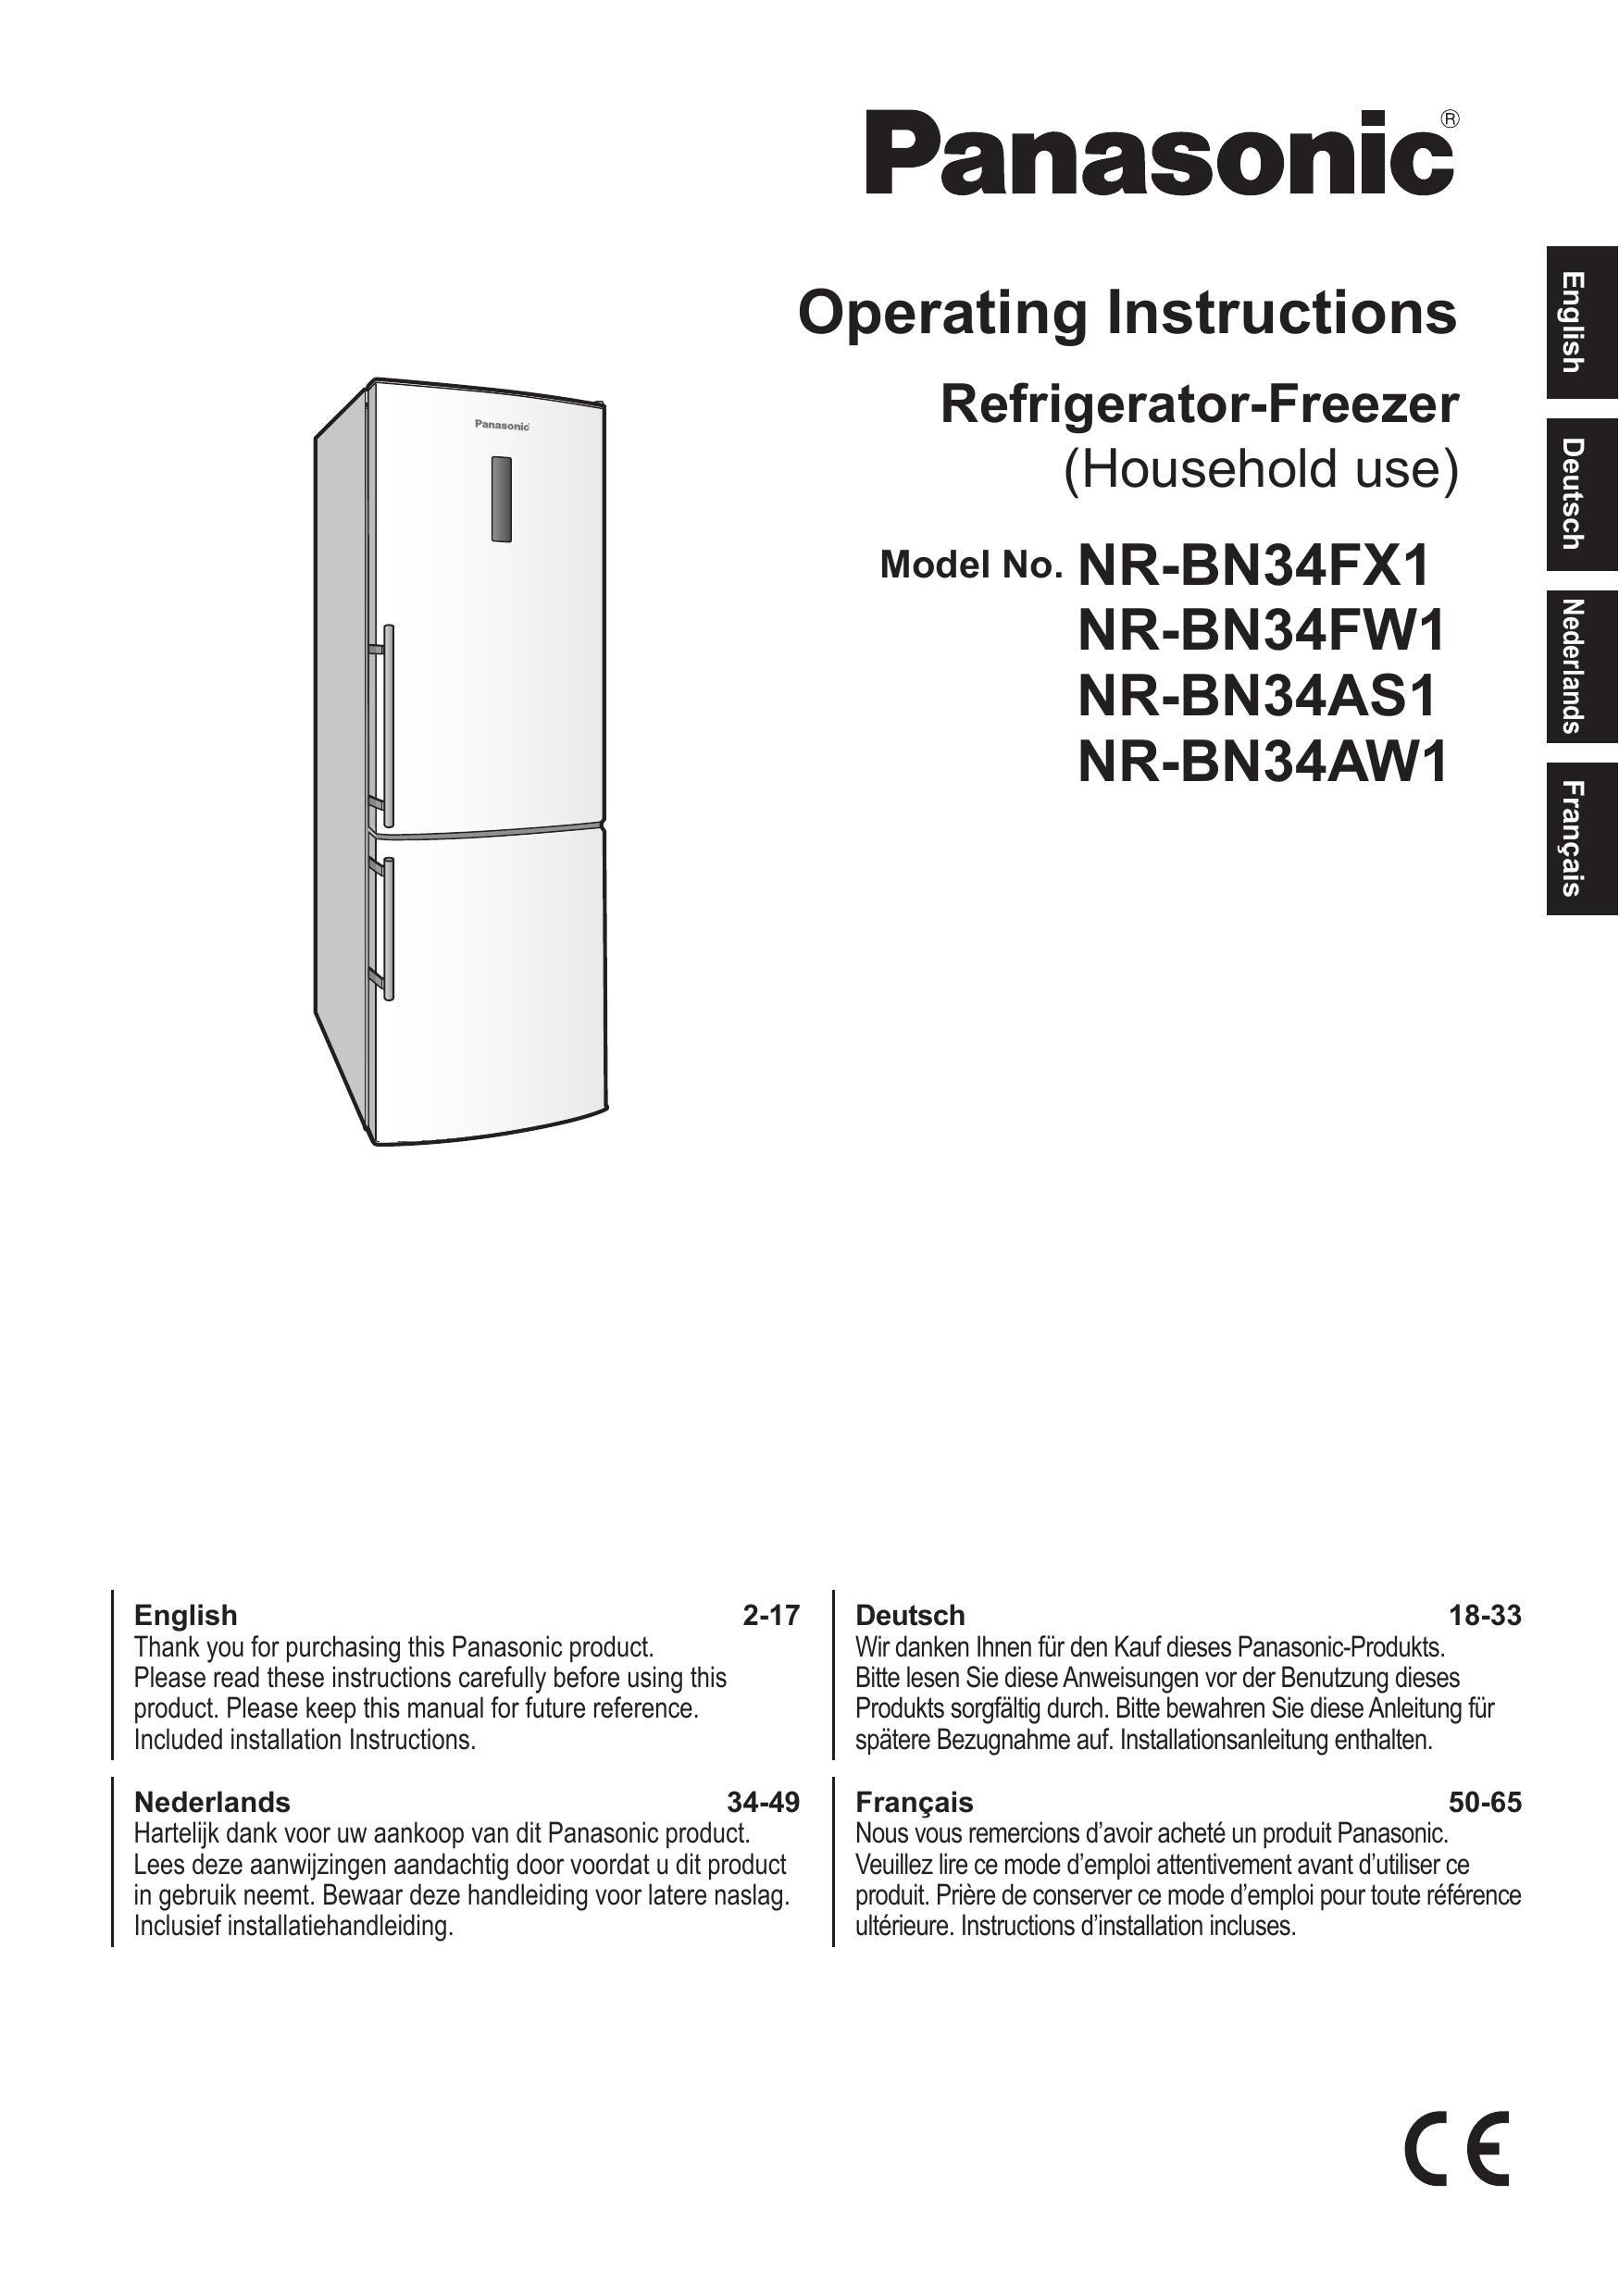 Panasonic NR-BN34FW1 Refrigerator User Manual